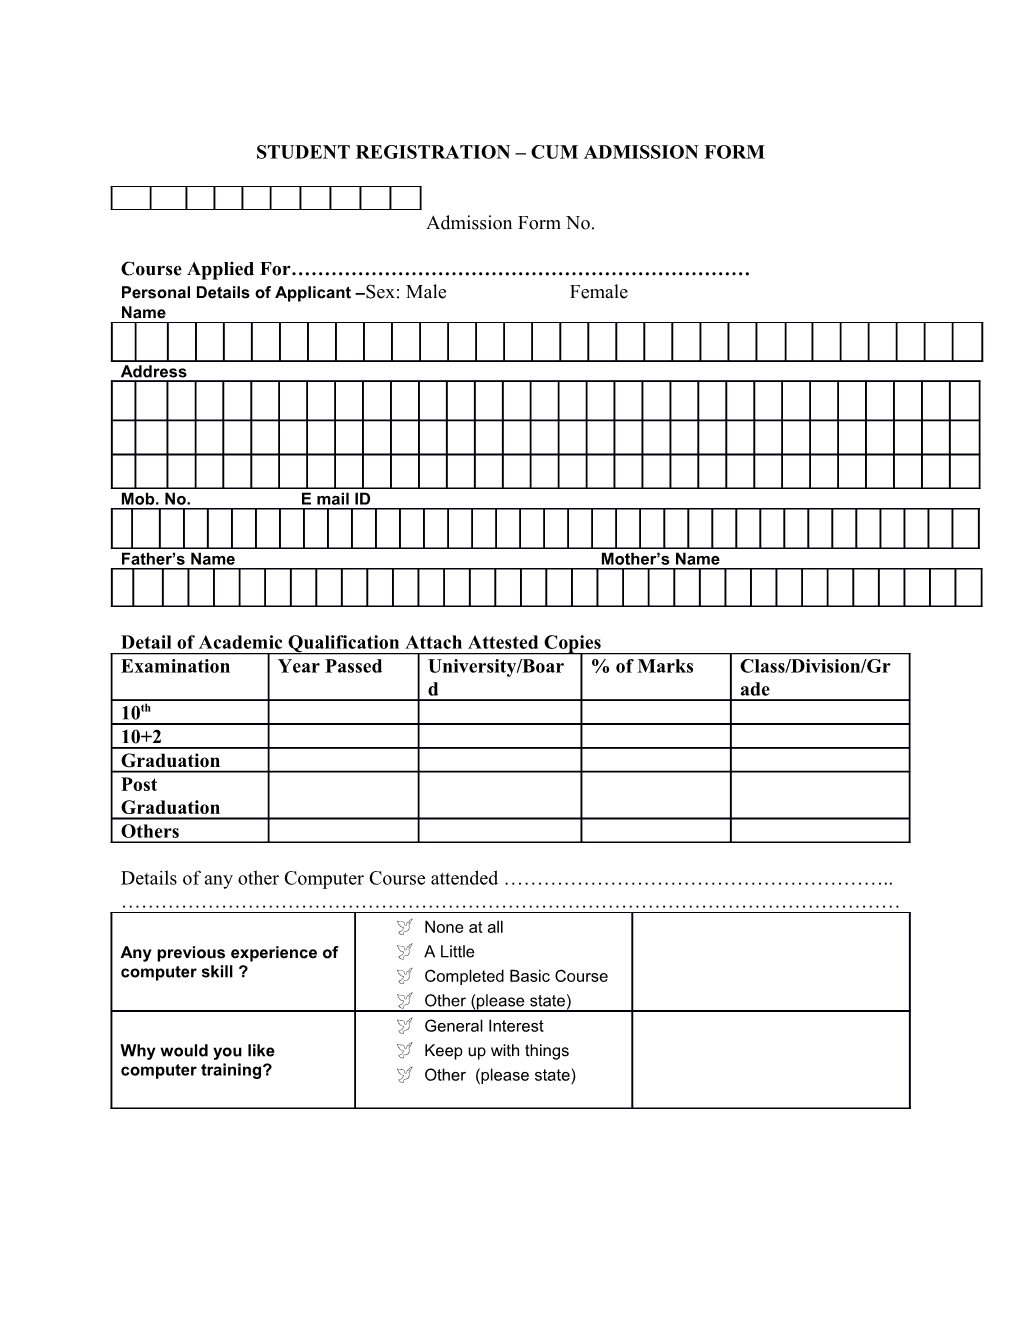 Student Registration Cum Admission Form